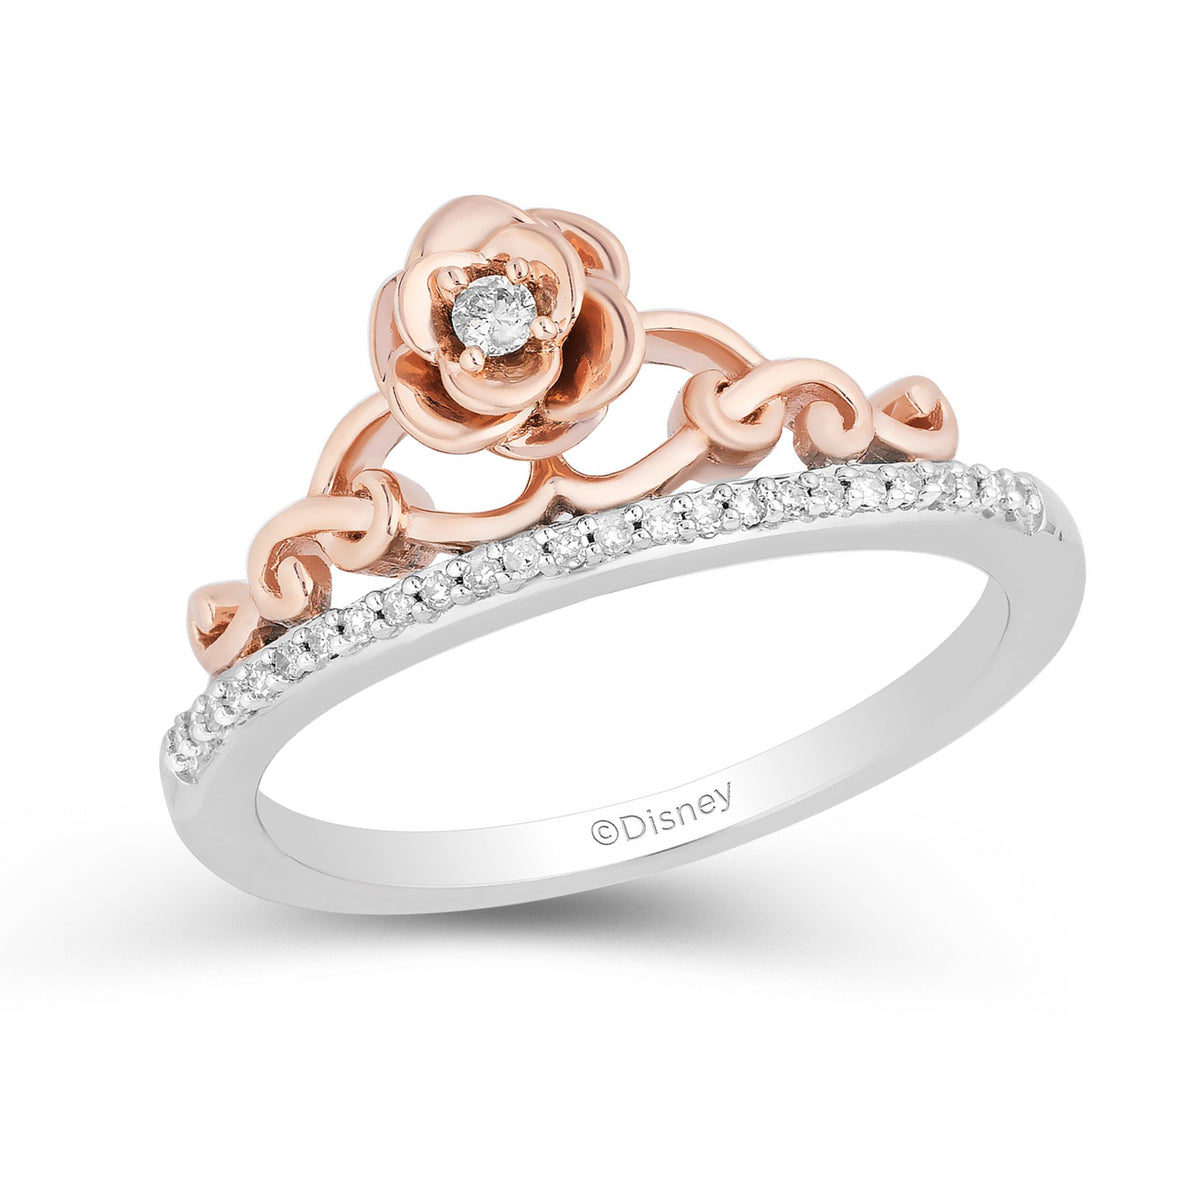 Disney Belle Inspired Key Diamond Pendant | Enchanted Disney Fine Jewelry